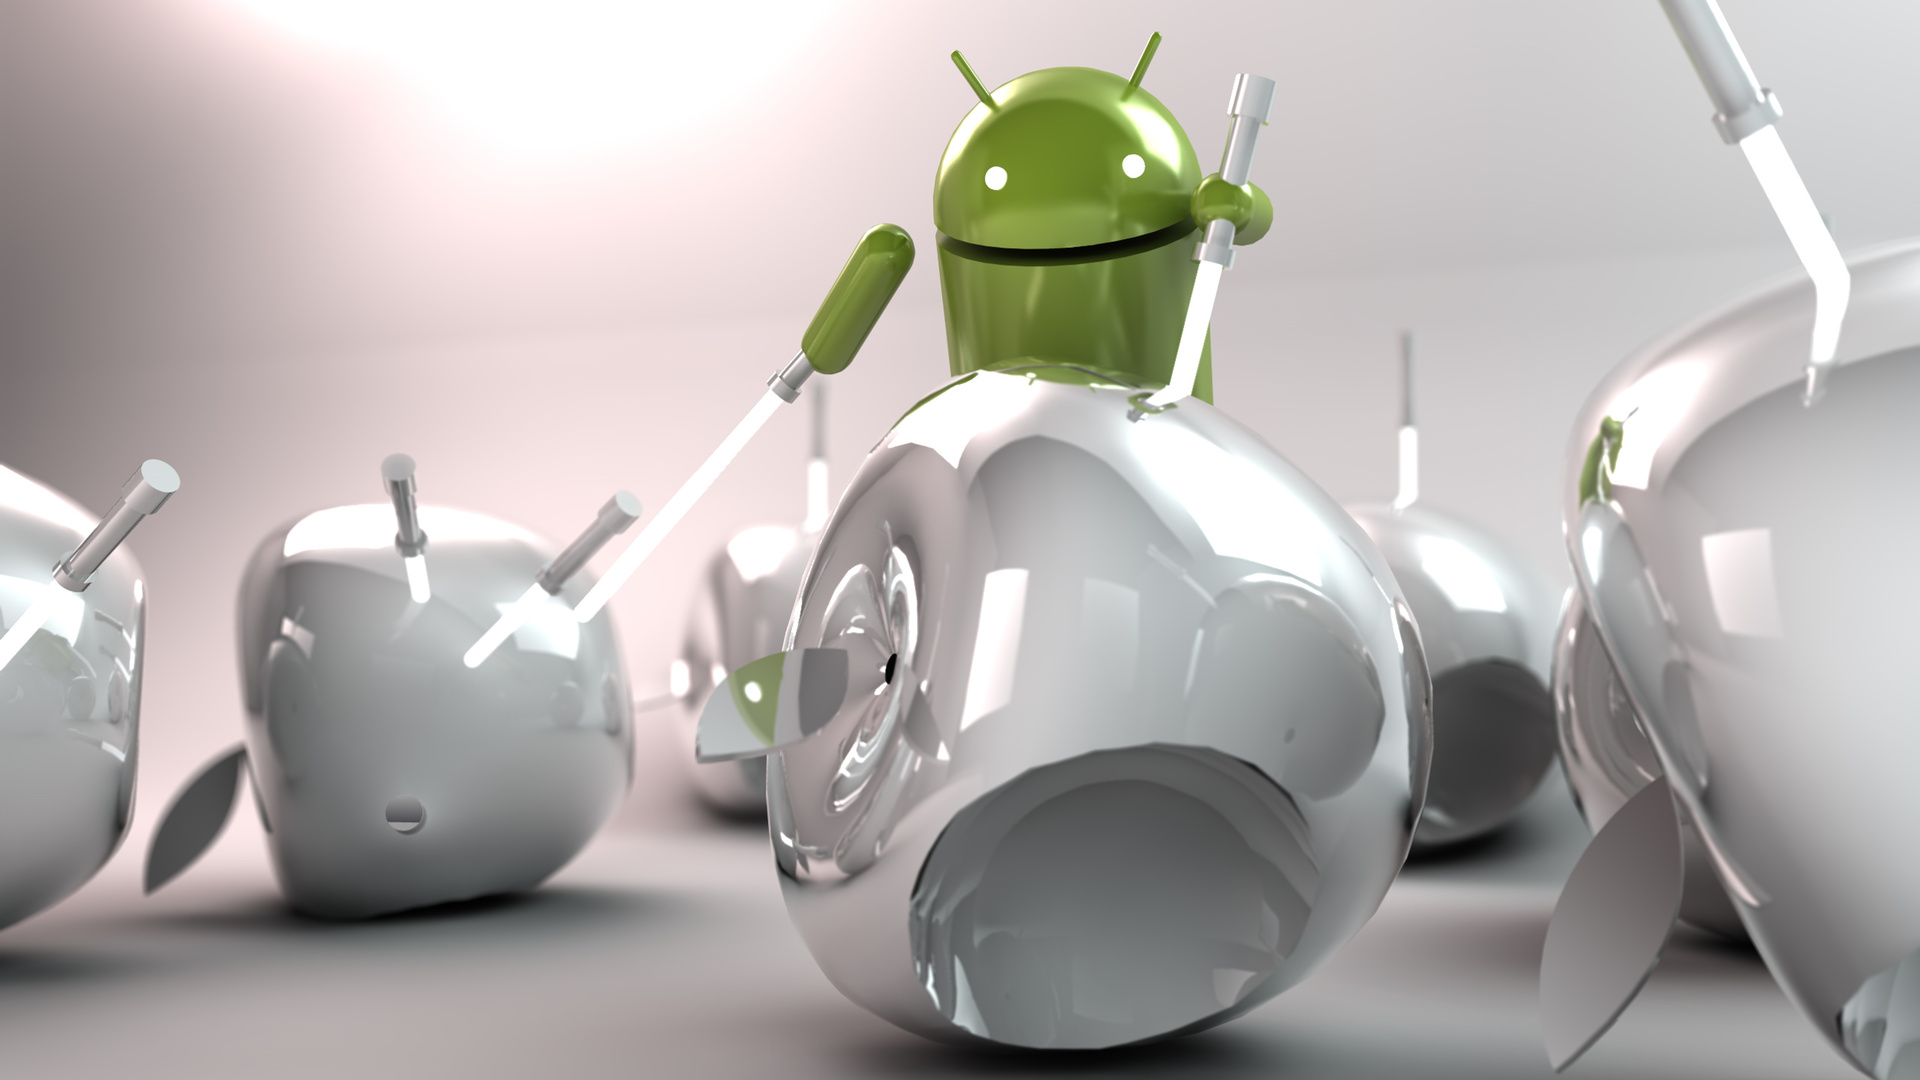 Android Massacre Apples Hd Wallpapers Fullscreen Widescreen - Android Vs Apple Vs Samsung - HD Wallpaper 